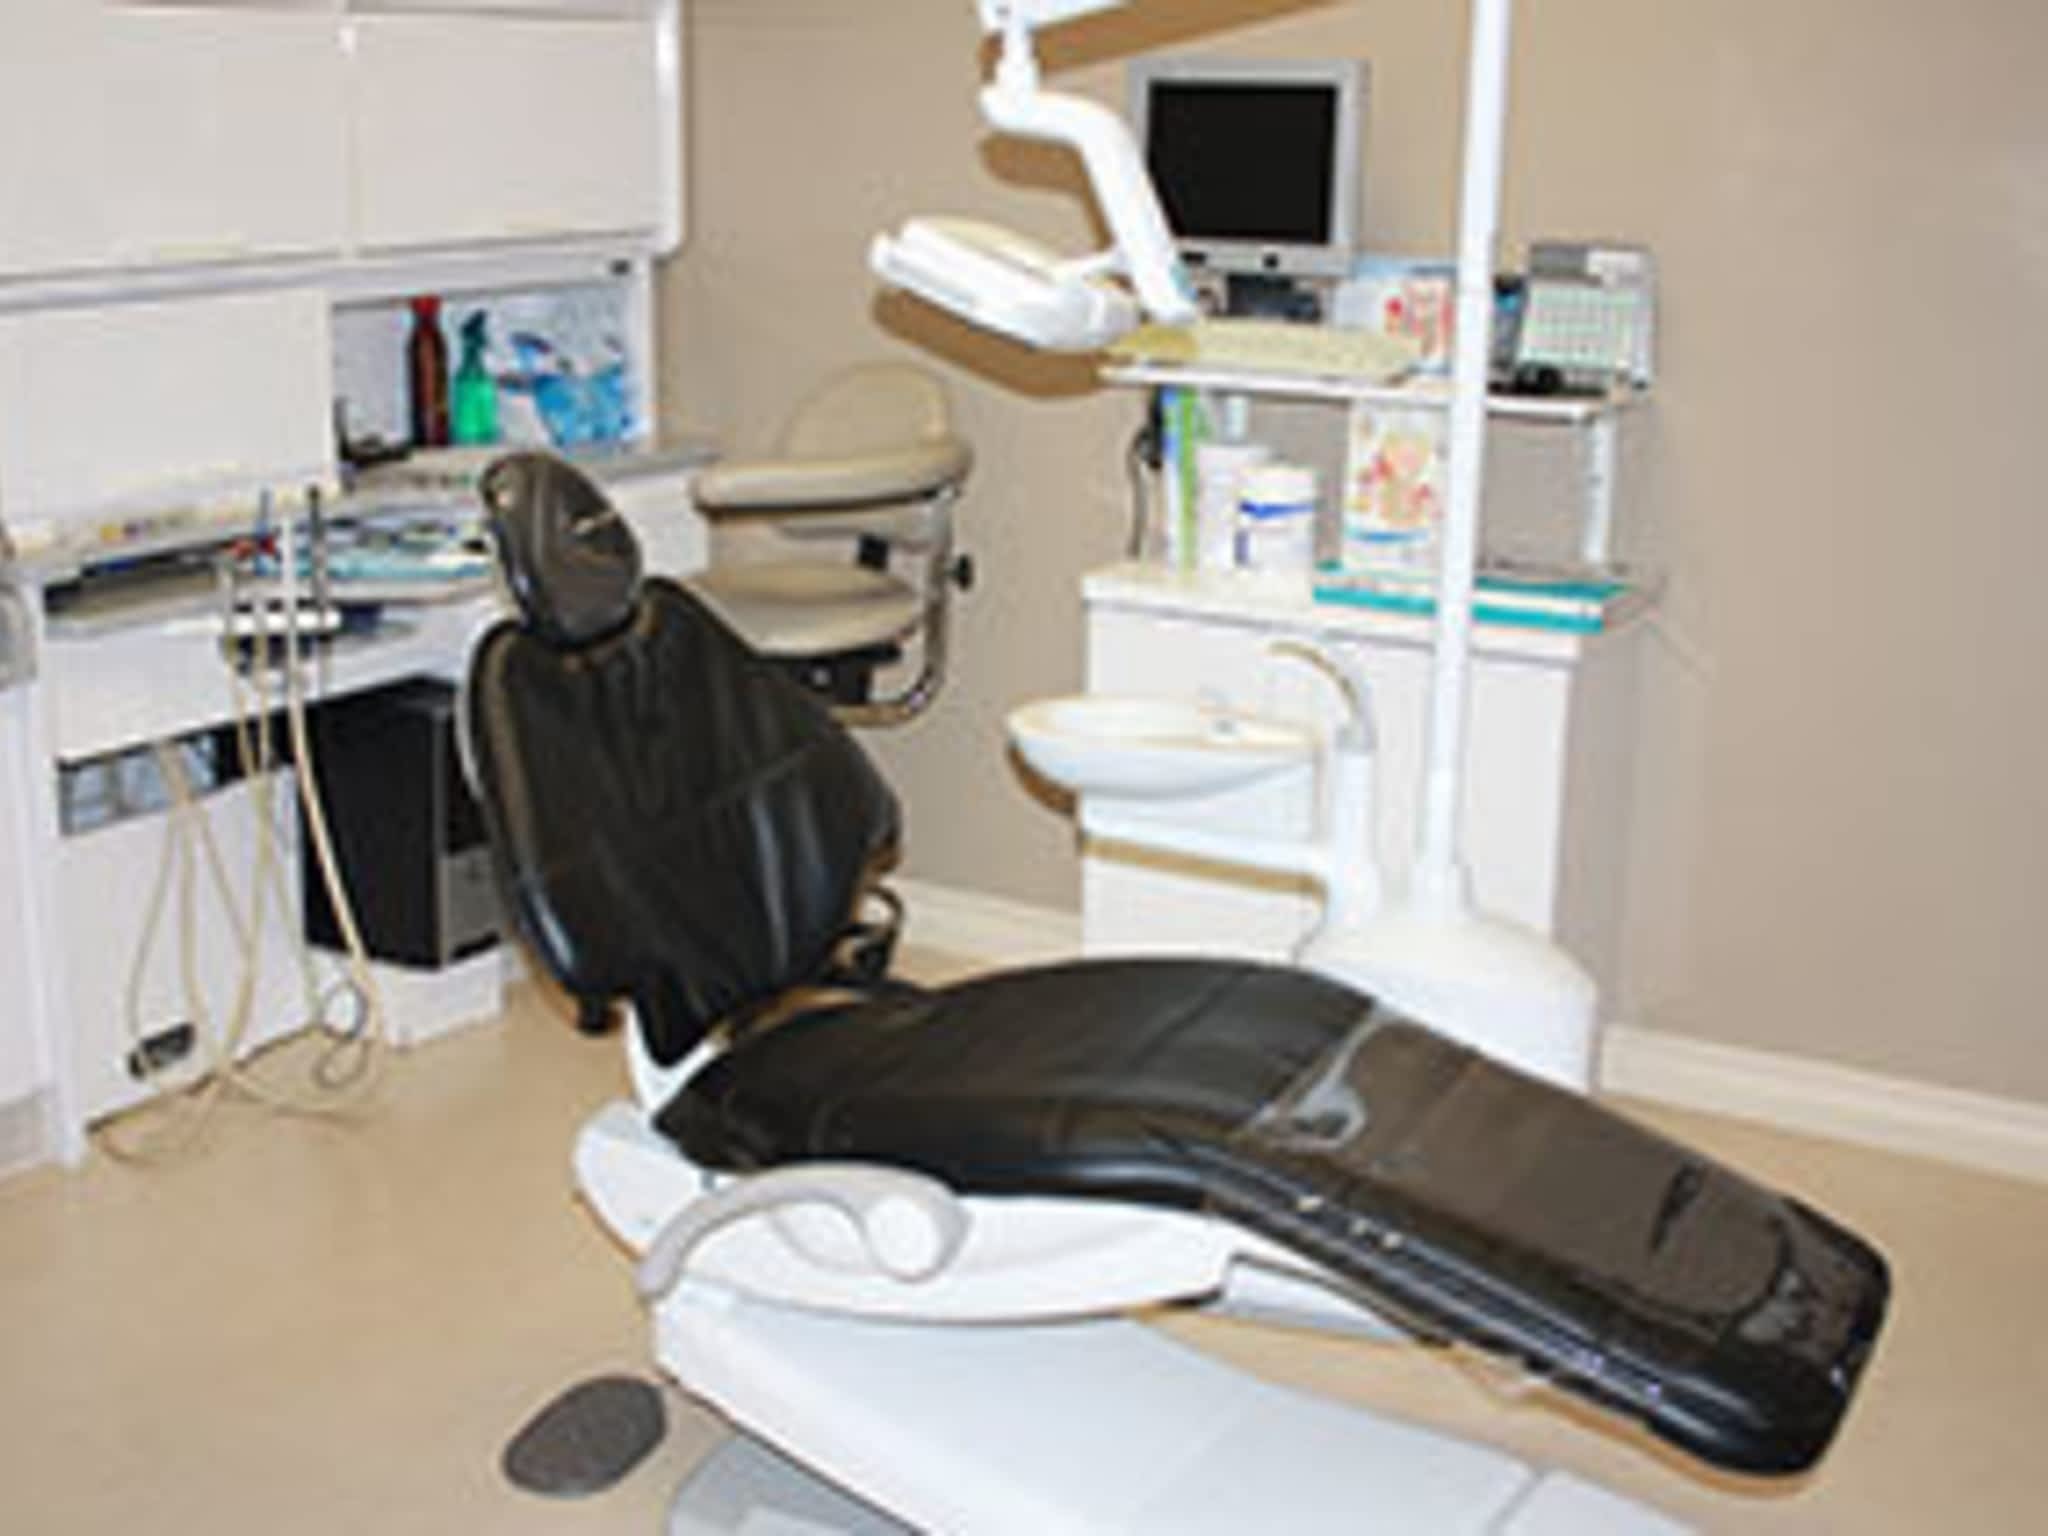 photo Devon Plaza Dental - Dr Gary Mannarino